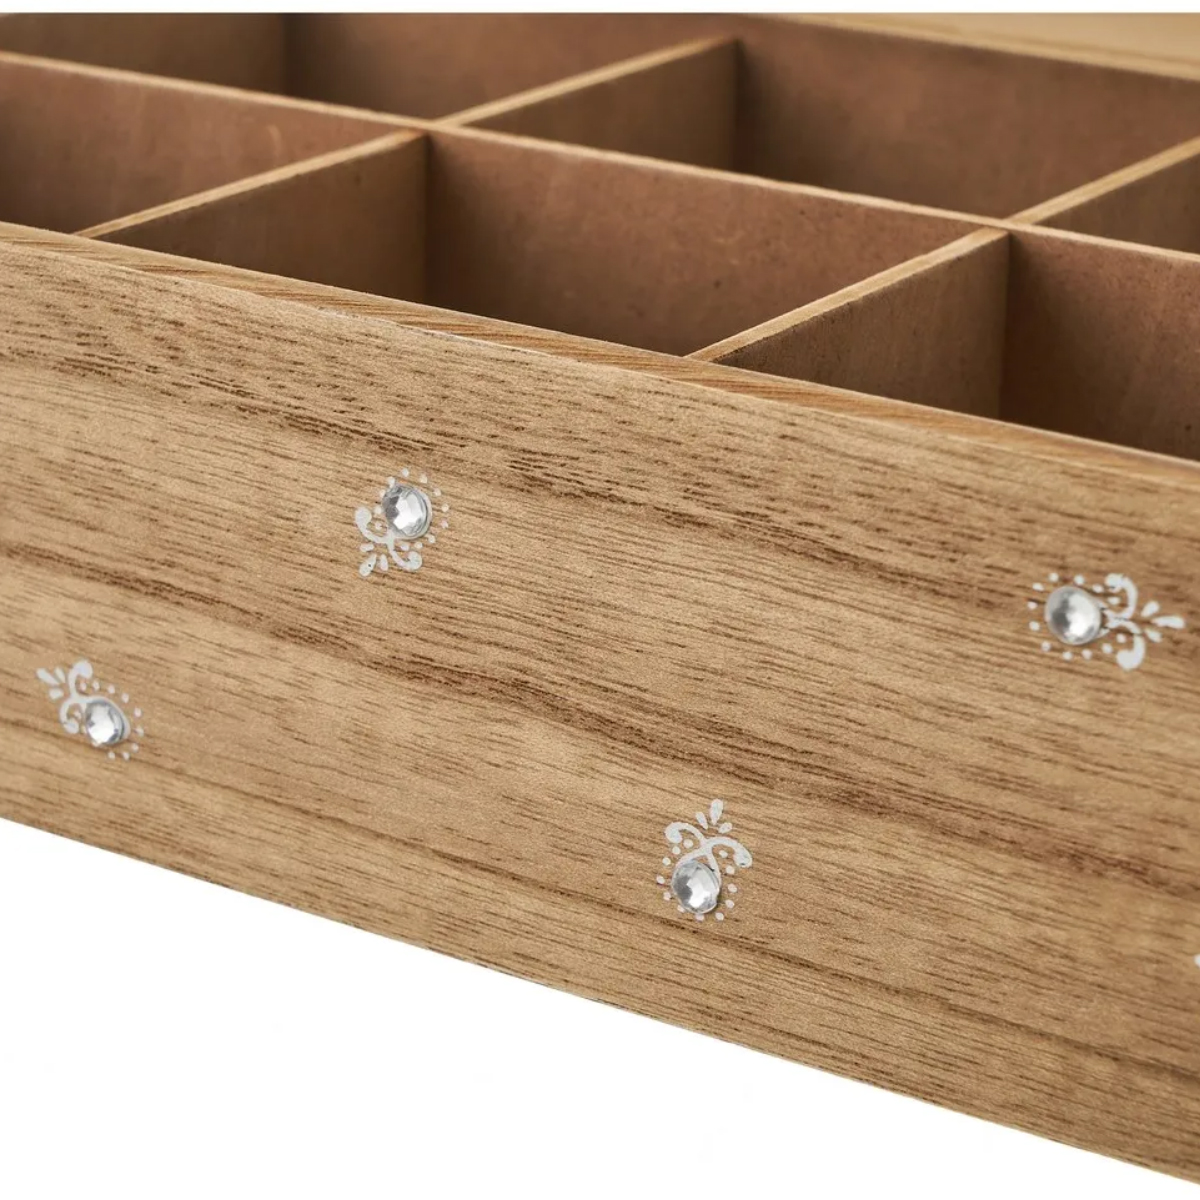 Mandalas compartmentalized wooden box